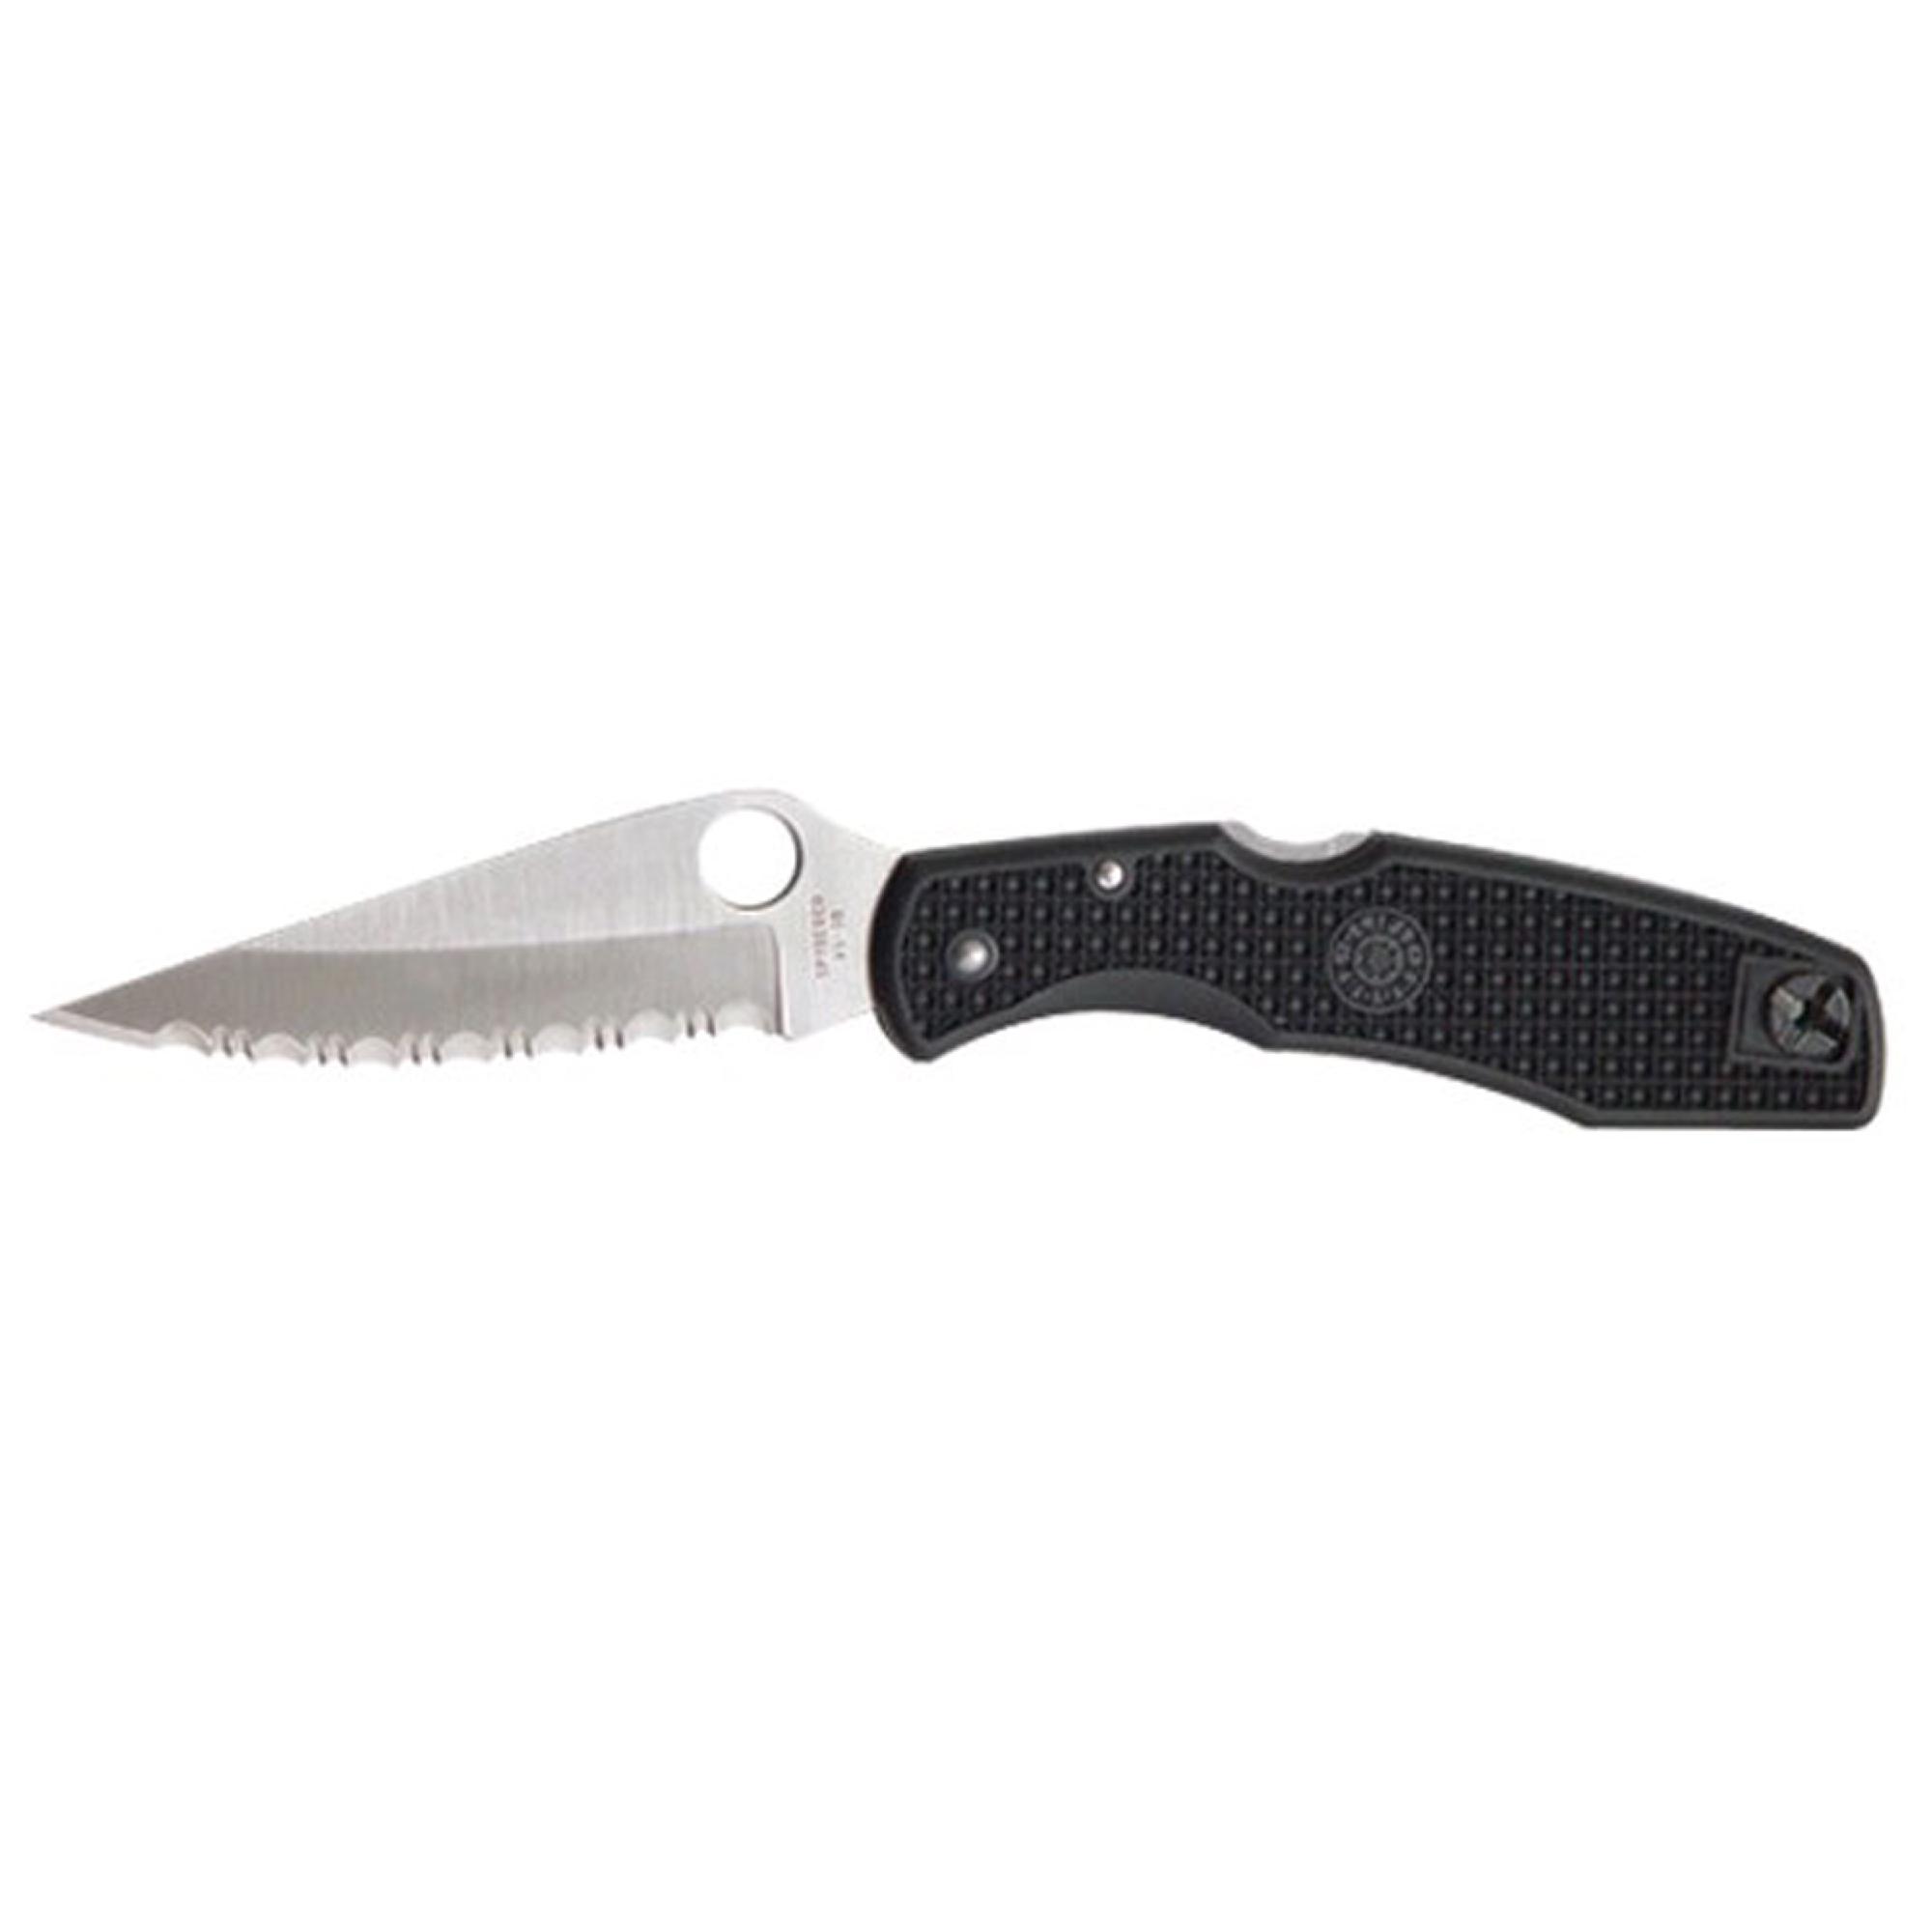 Spyderco Endura4 Lightweight Black FRN Spyderedge Knife